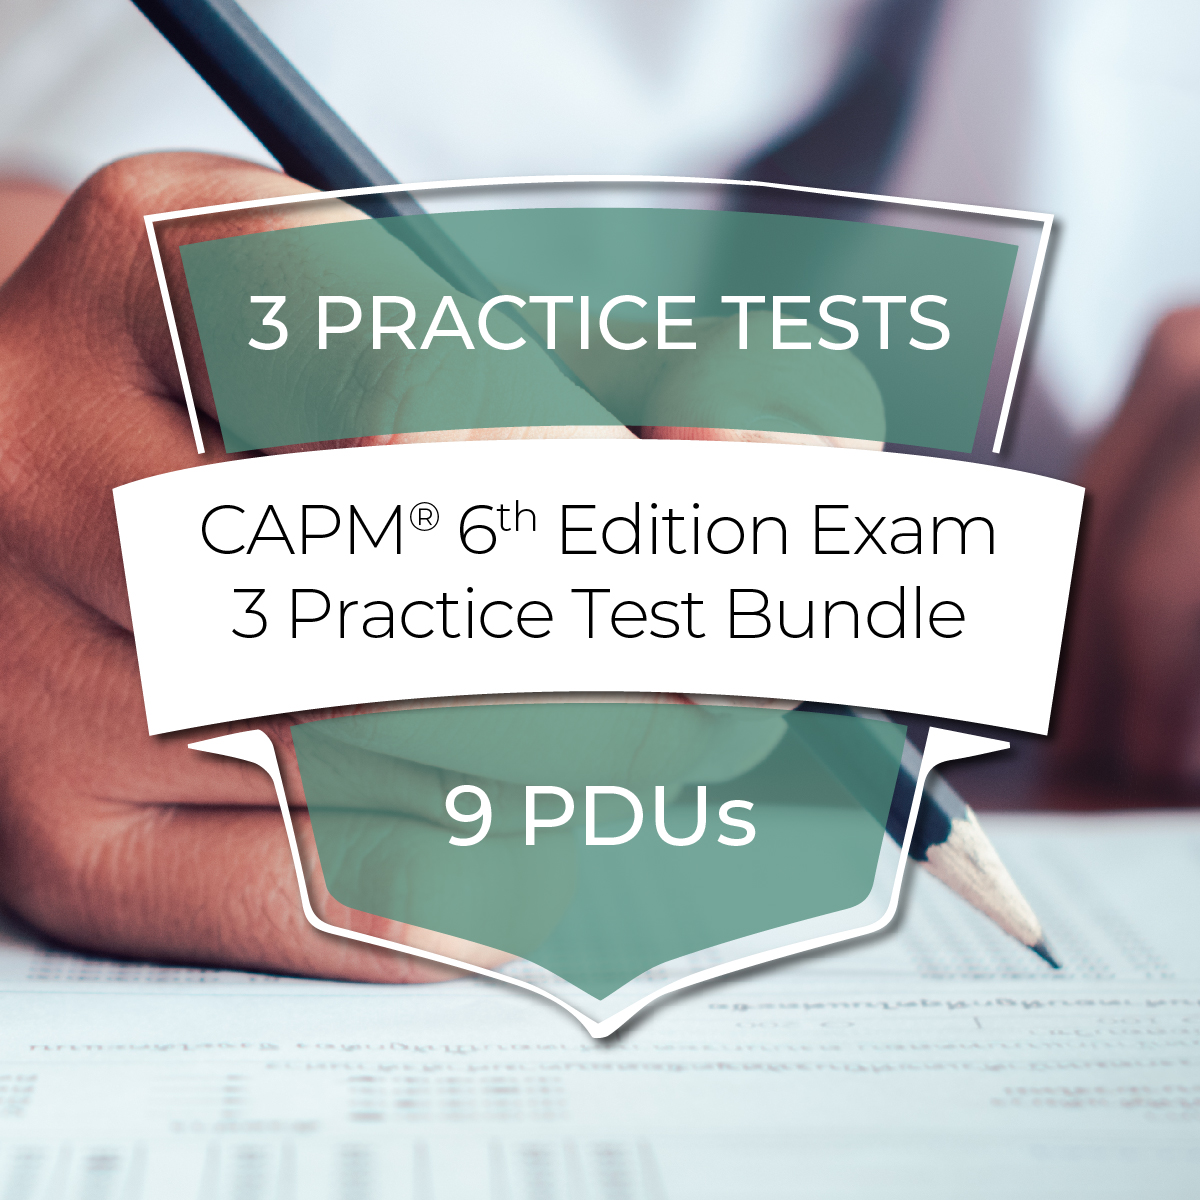 CAPM® 6th Edition Exam - 3 Practice Test Bundle - Save 15%